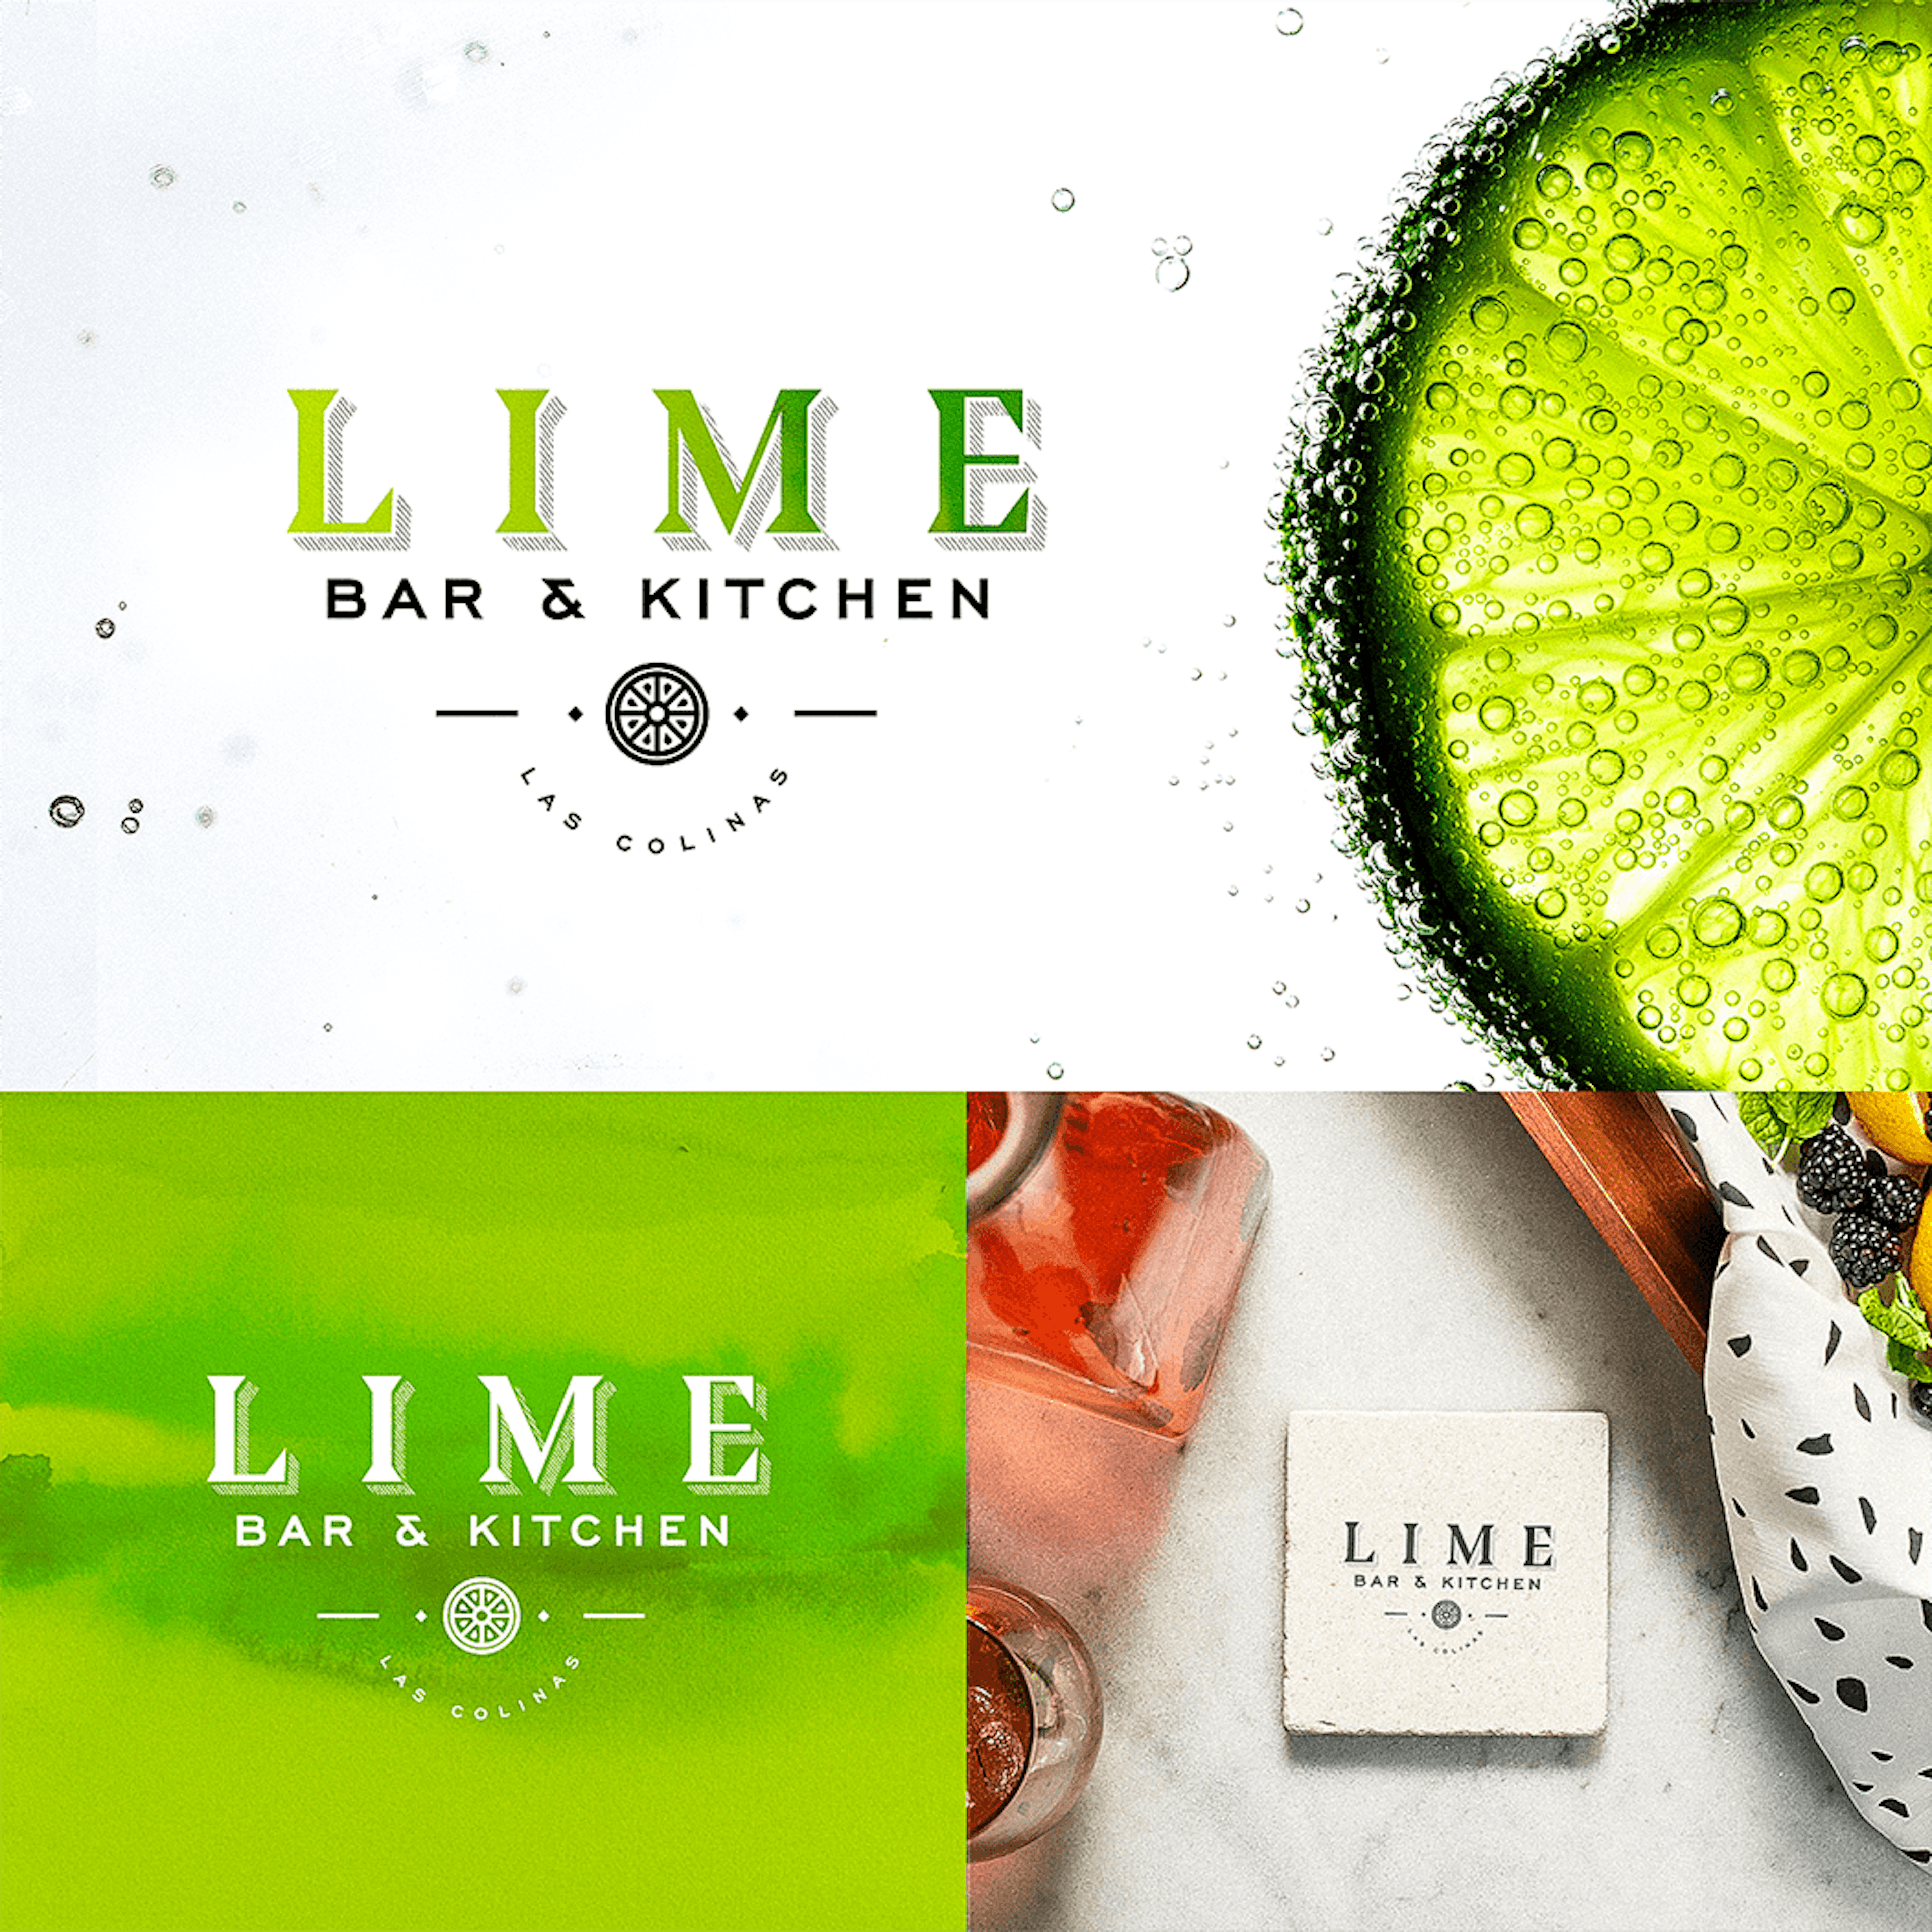 Lime bar & kitchen branding stack